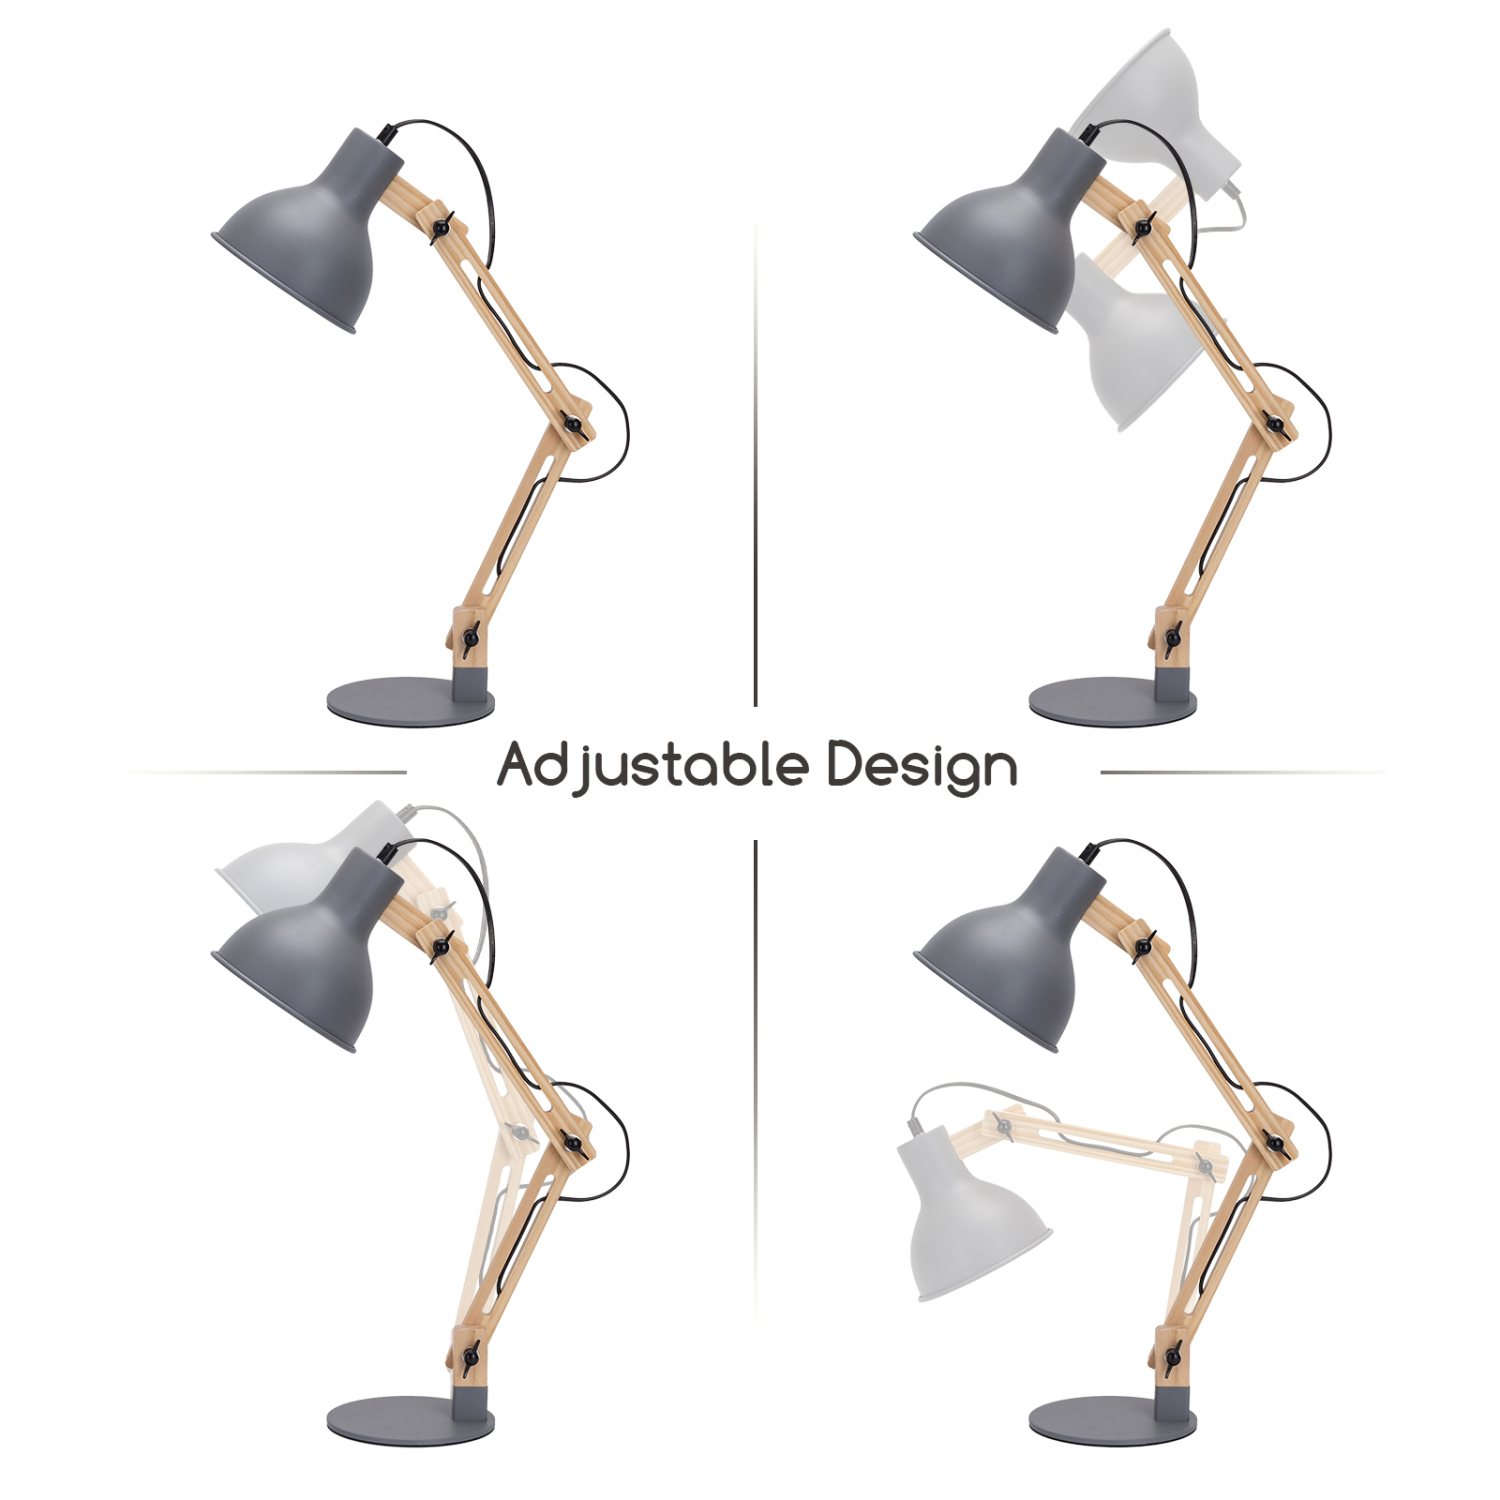 Aigostar 13AS8 - Bureaulamp - Design tafellamp - In hoogte verstelbaar en kantelbaar - H455mm - E27 fitting - Grijs